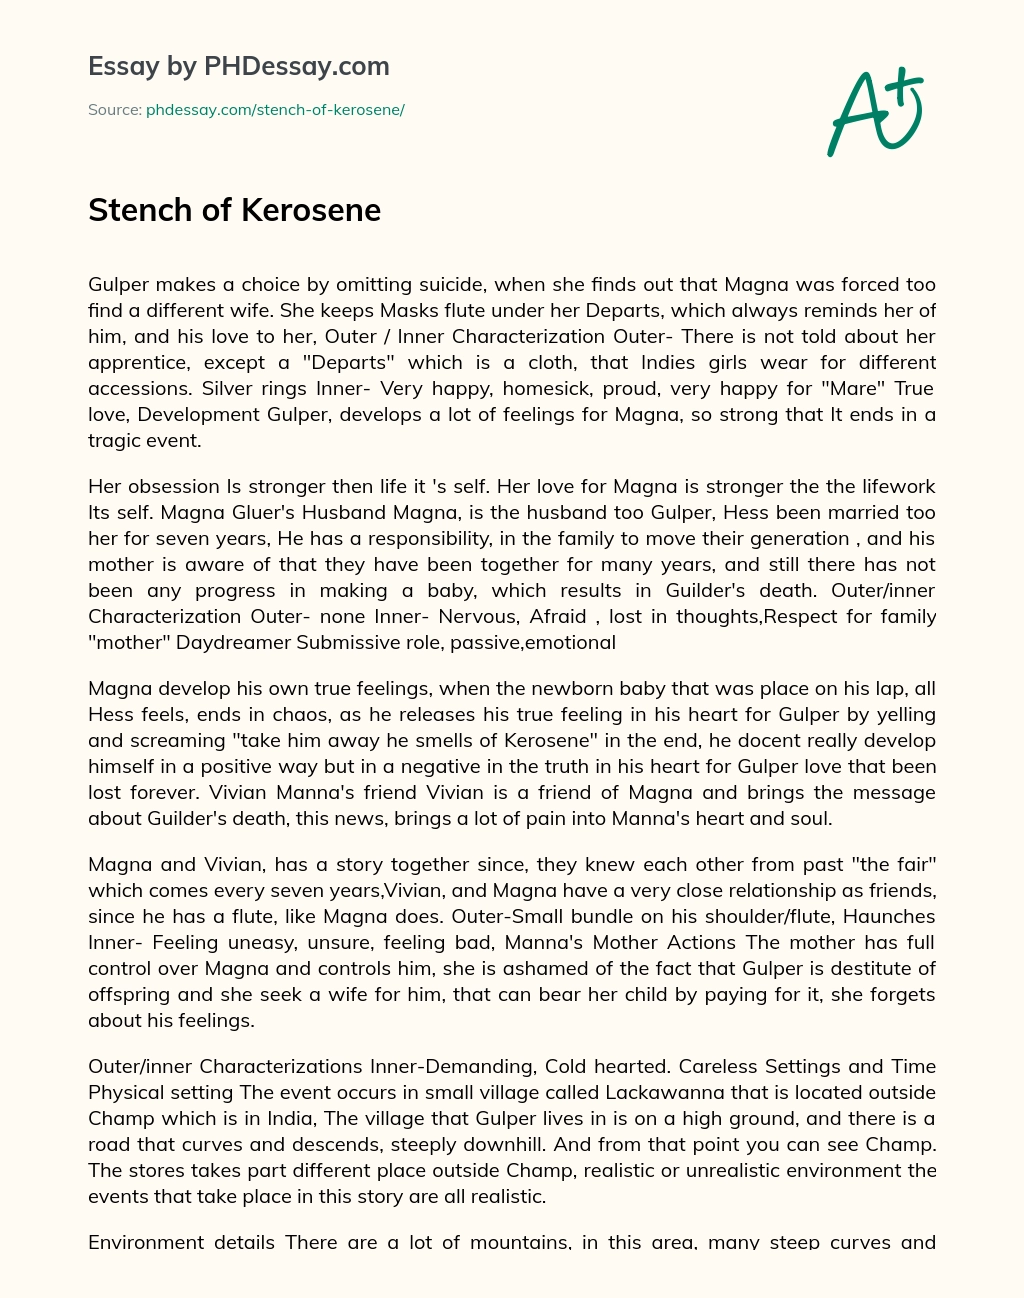 Stench of Kerosene essay